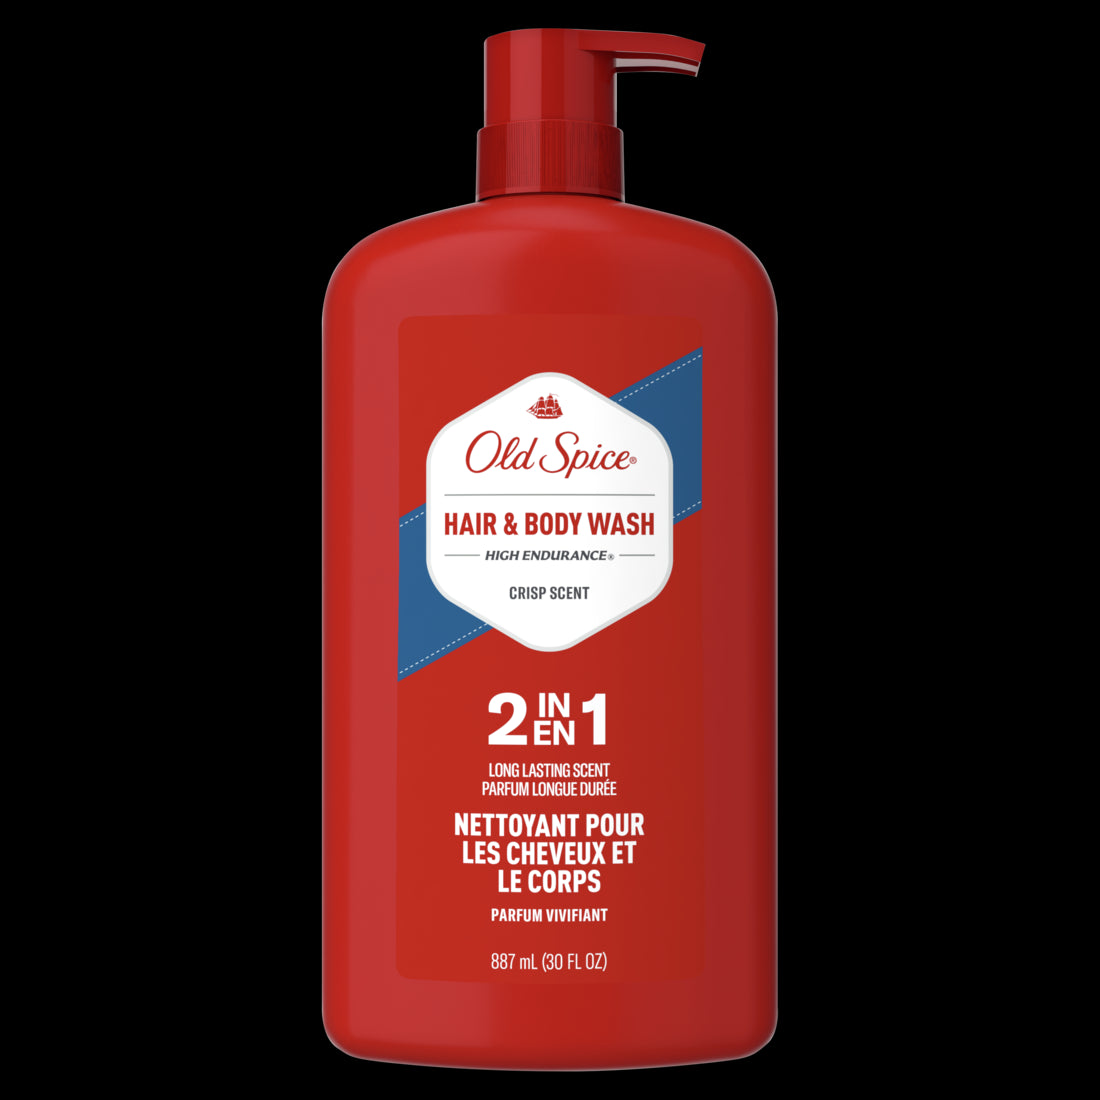 Old Spice High Endurance Hair & Body Wash for Men Crisp Scent - 30z/4pk